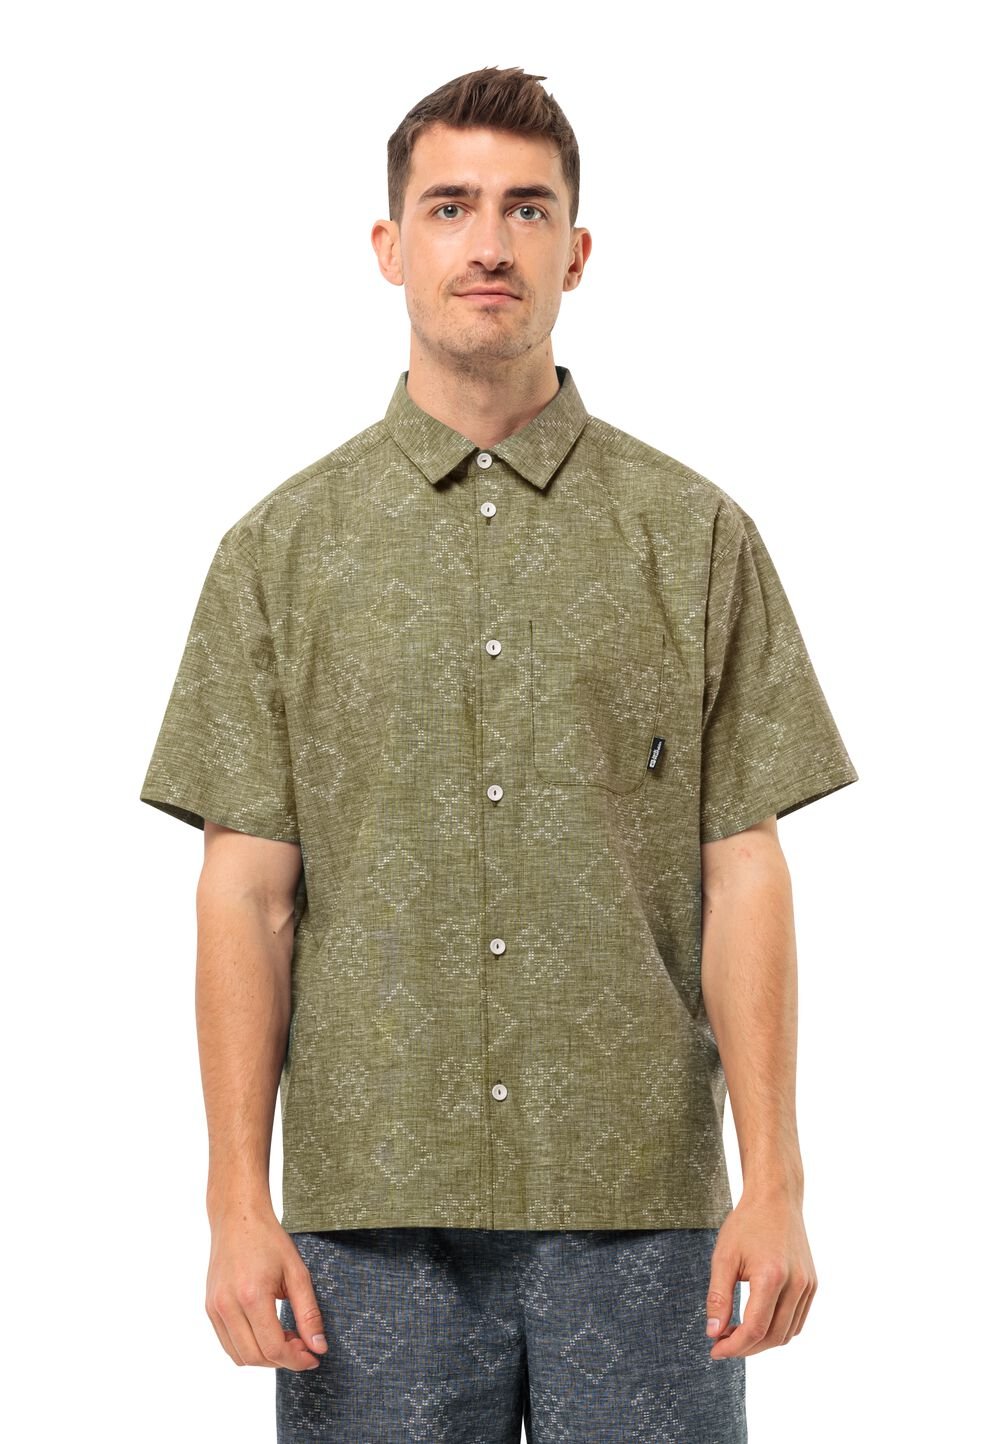 Jack Wolfskin Karana Shirt Men Overhemd met korte mouwen Heren L bruin bay leaf